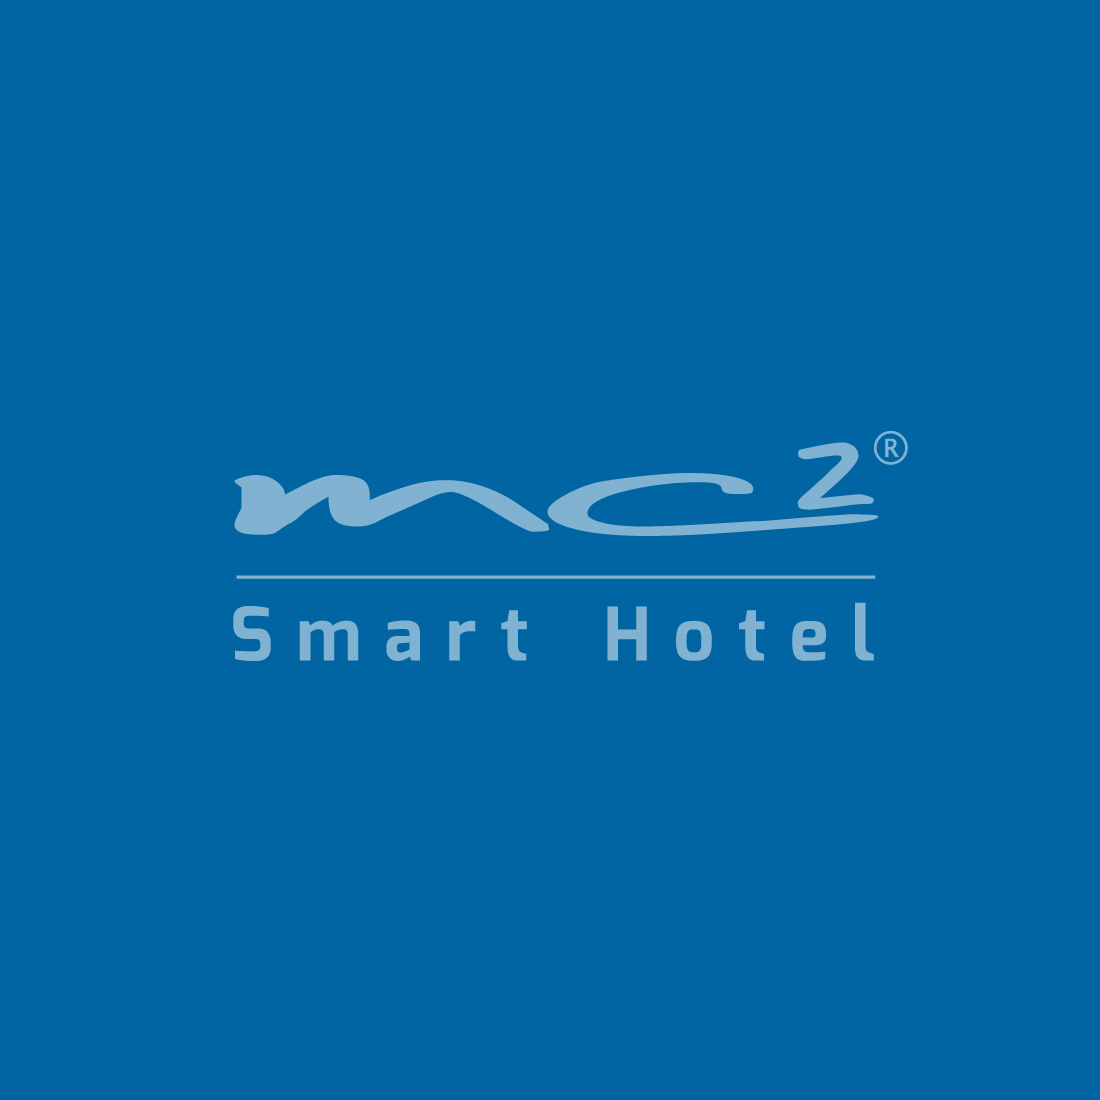 Mc2 Smart Hotel corporate identity